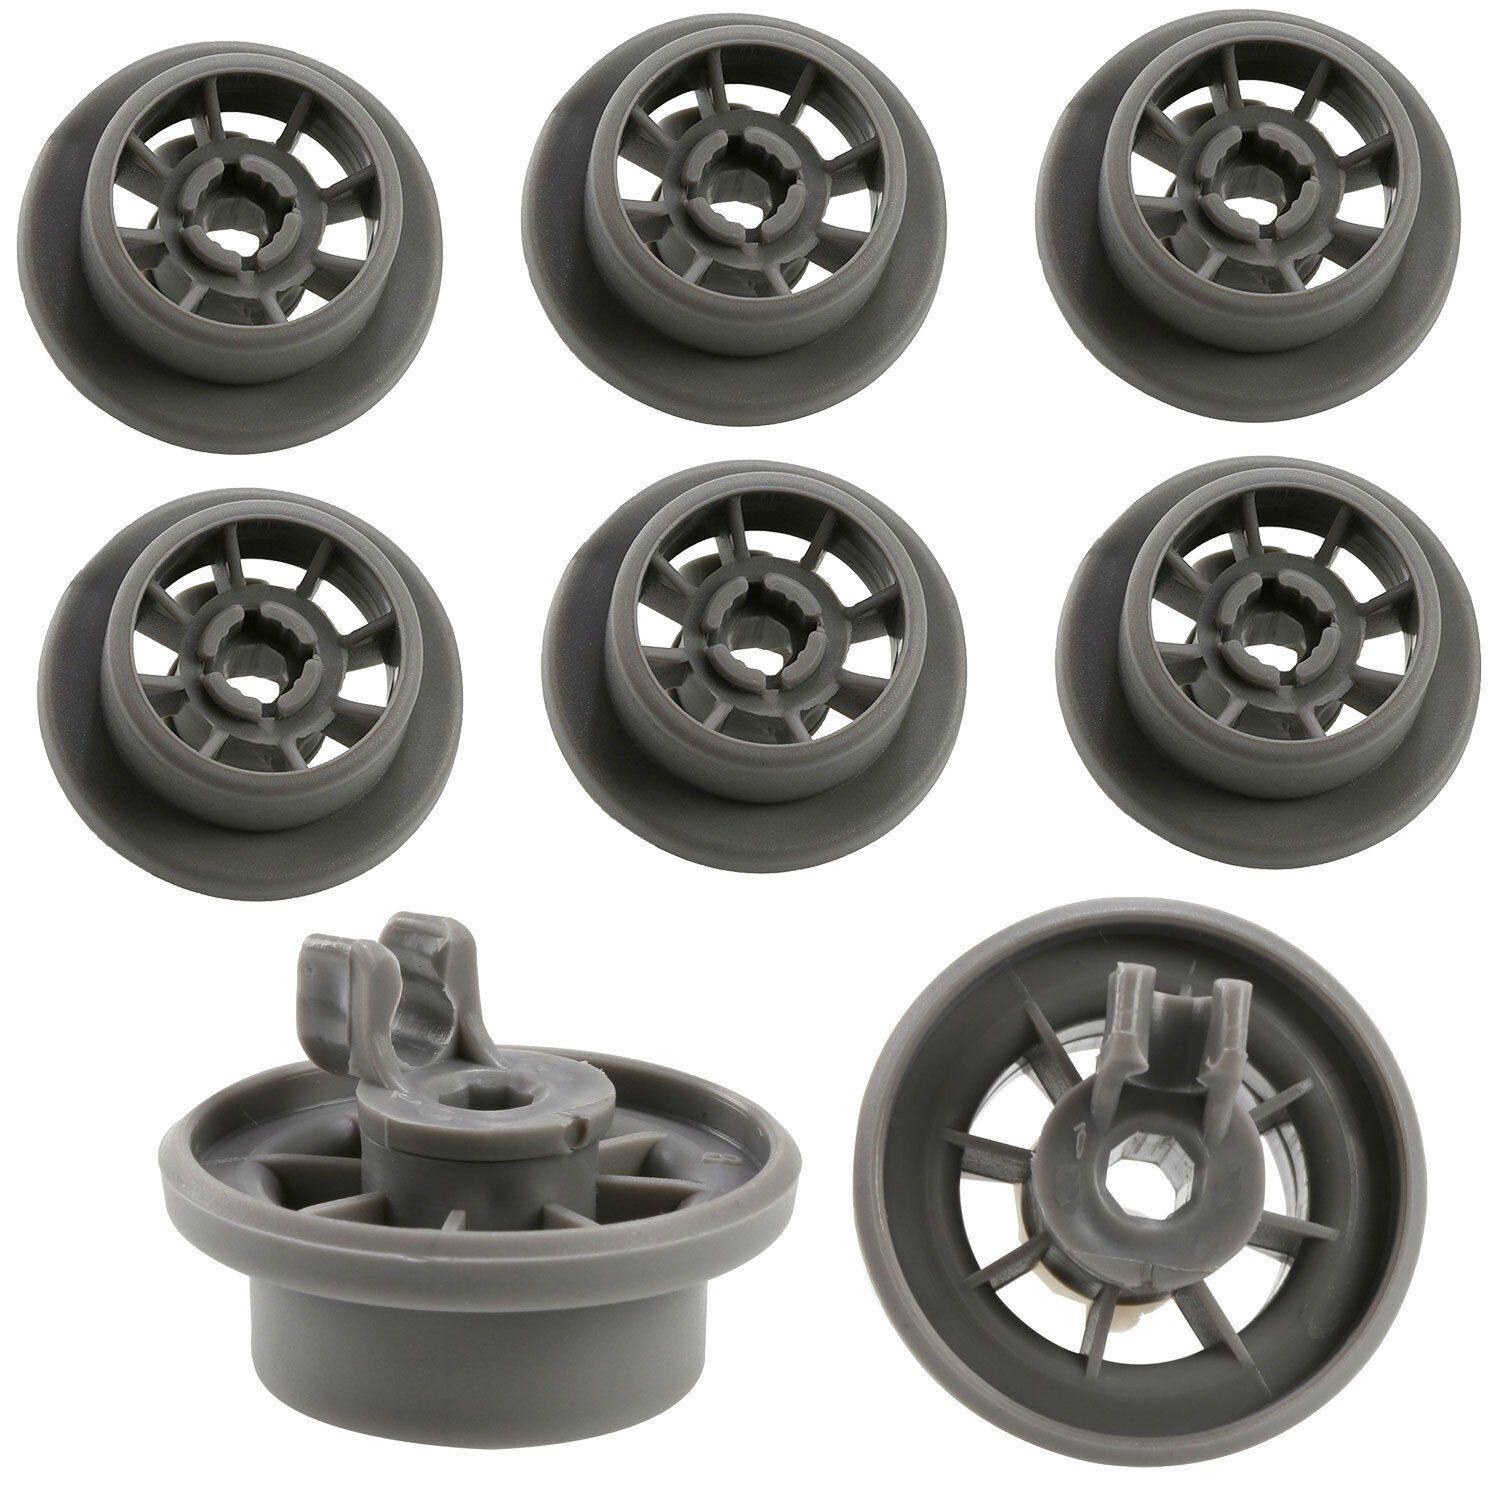 8X Diswasher Lower Bakset Wheel For Bosch 00420198 420198 PS8697067 Sparesbarn